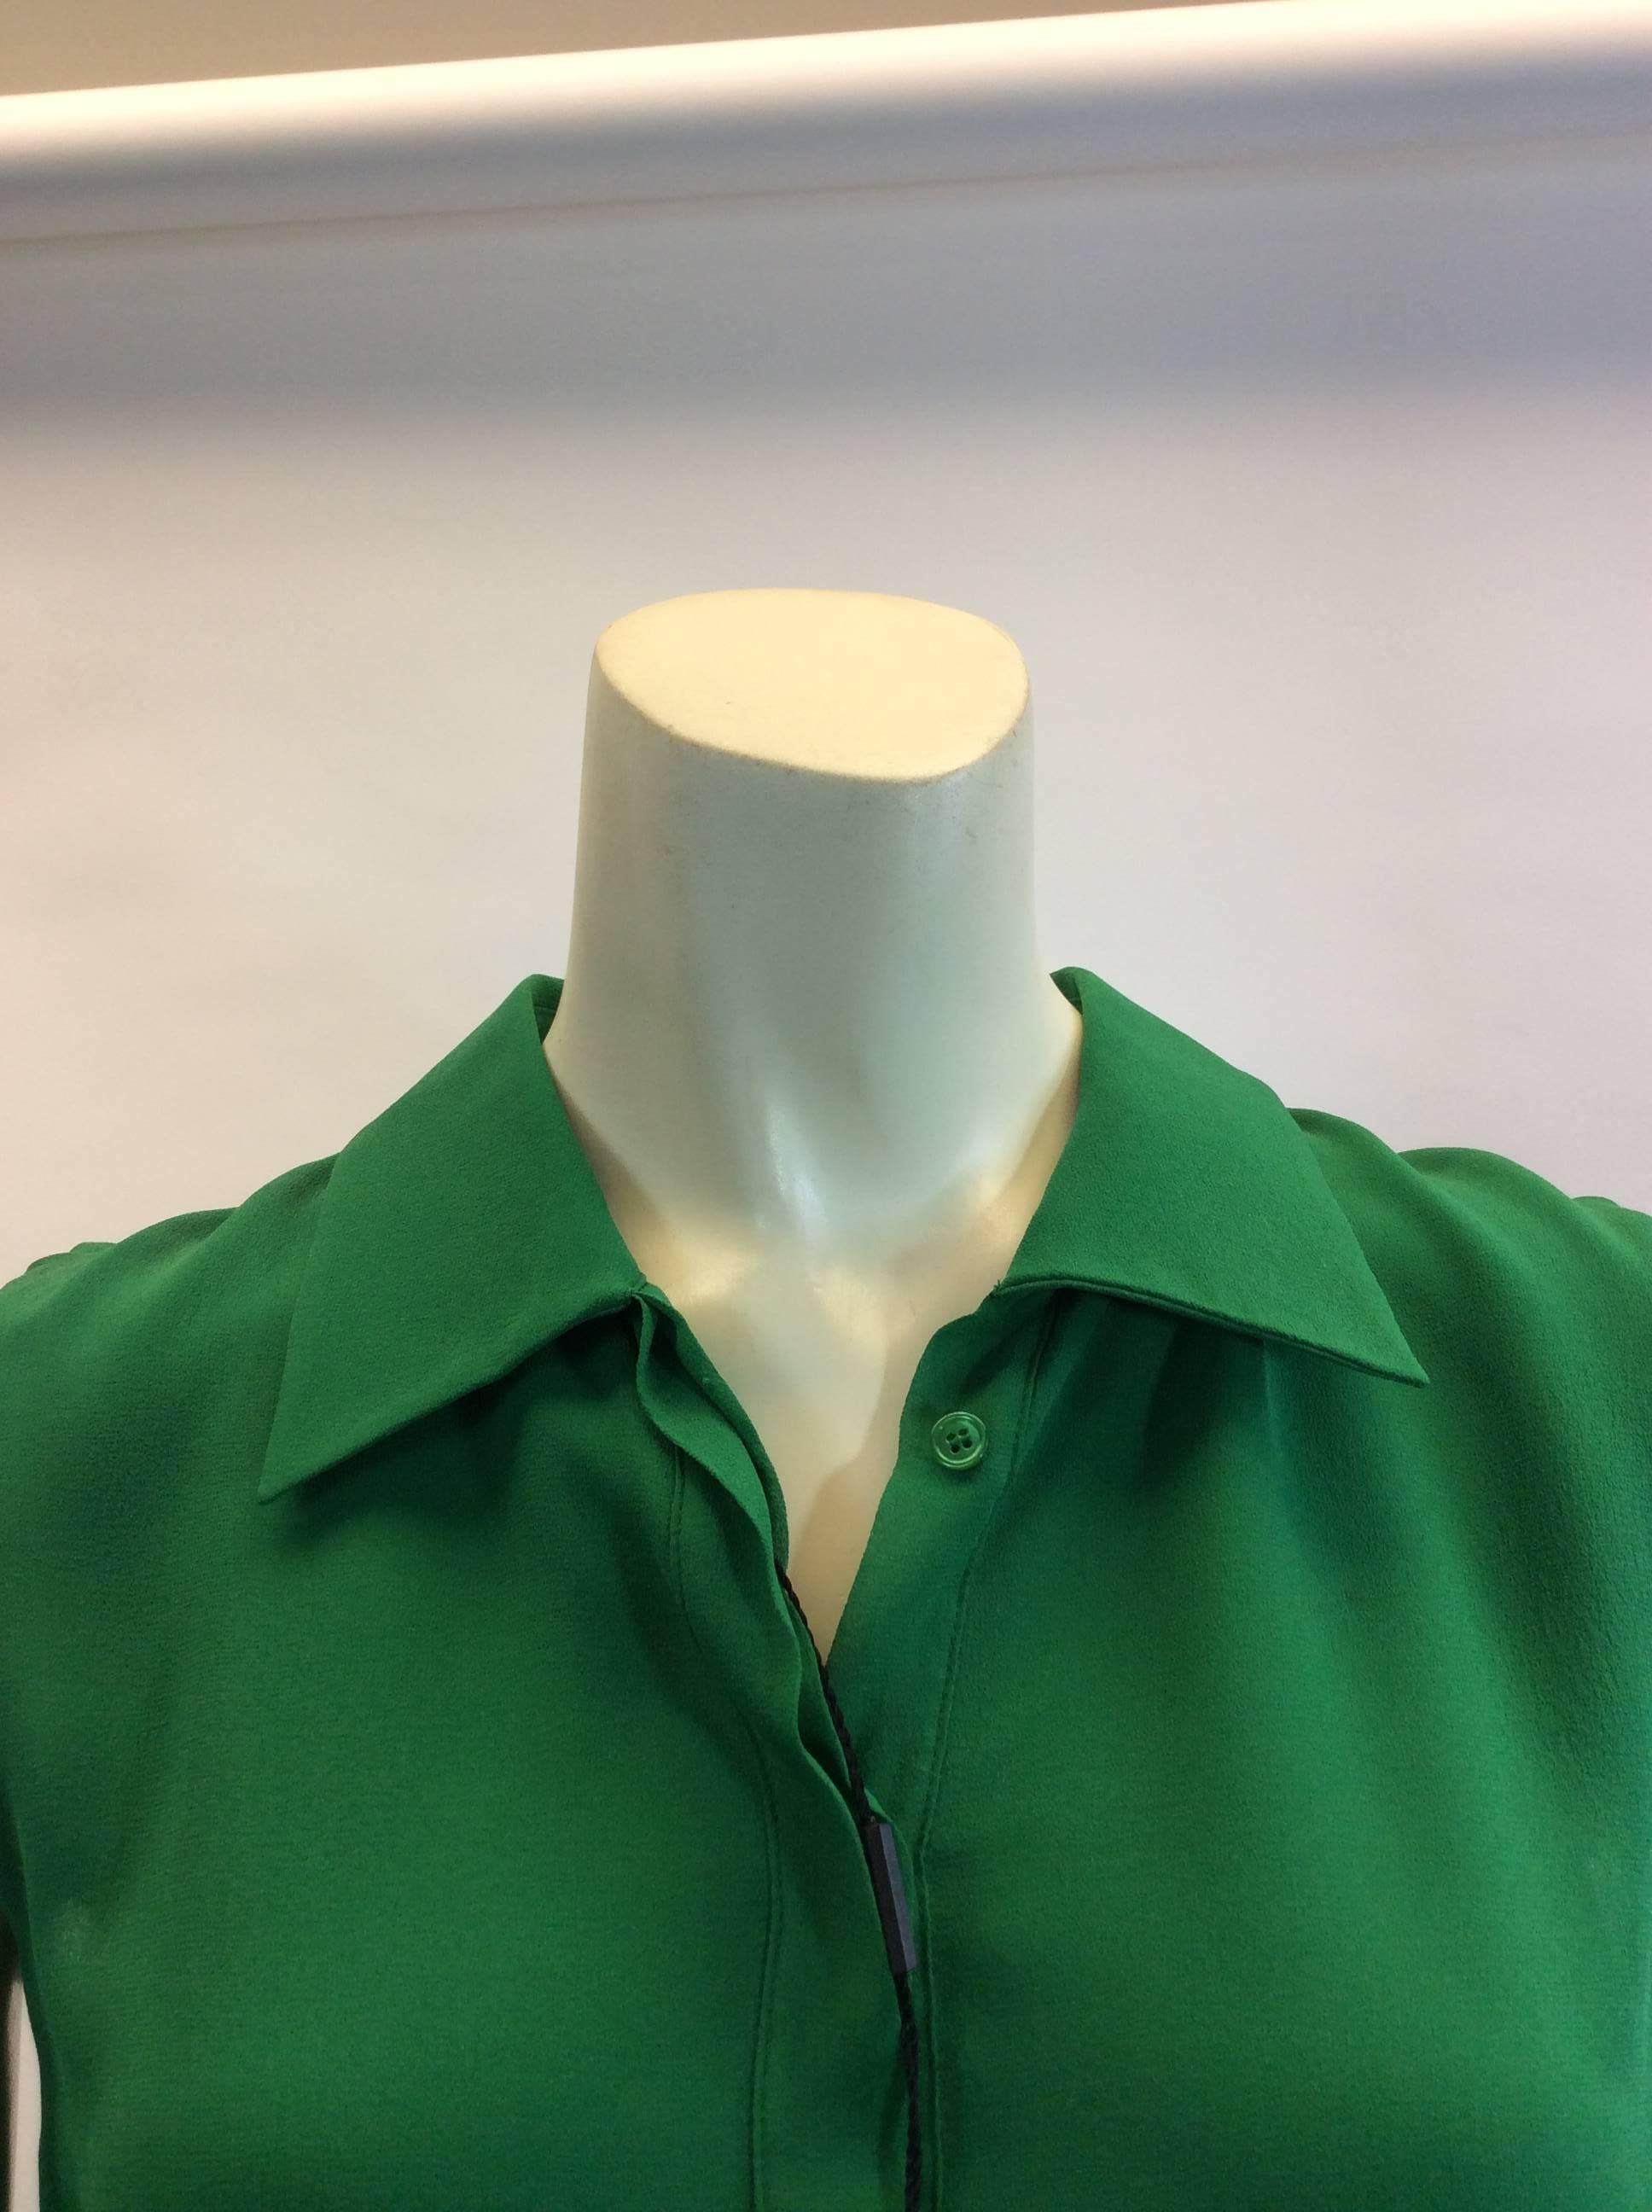 Akris NWT Silk Pant Suit
Emerald Green
Original Price, $995
100% Silk
Buttondown sleeveless top, high low cut
Size US 6
Made in Romania